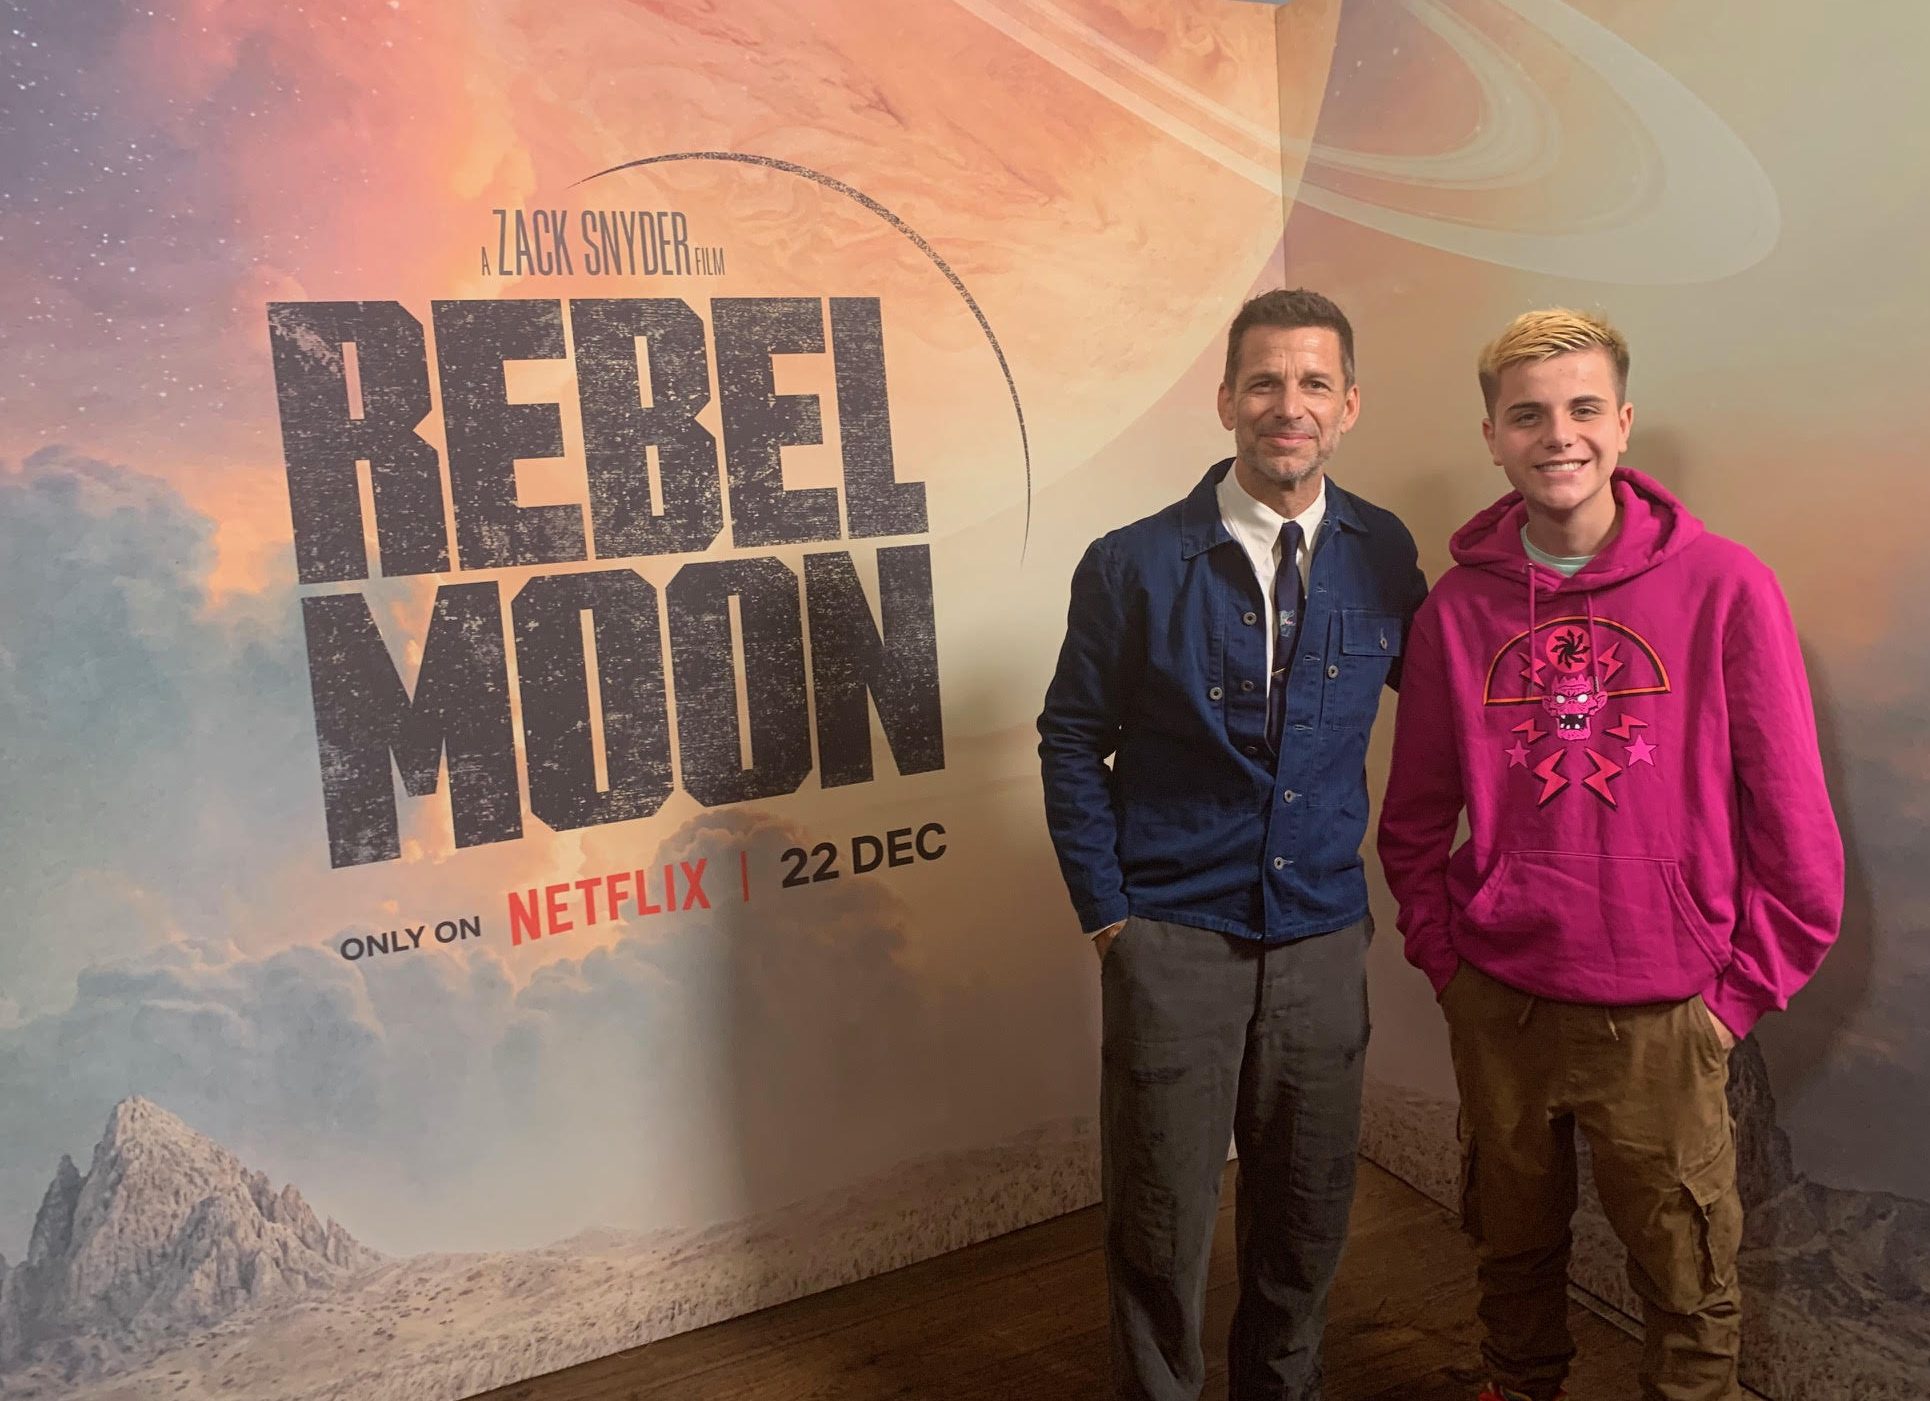 Zack Snyder já está trabalhando em Rebel Moon 3